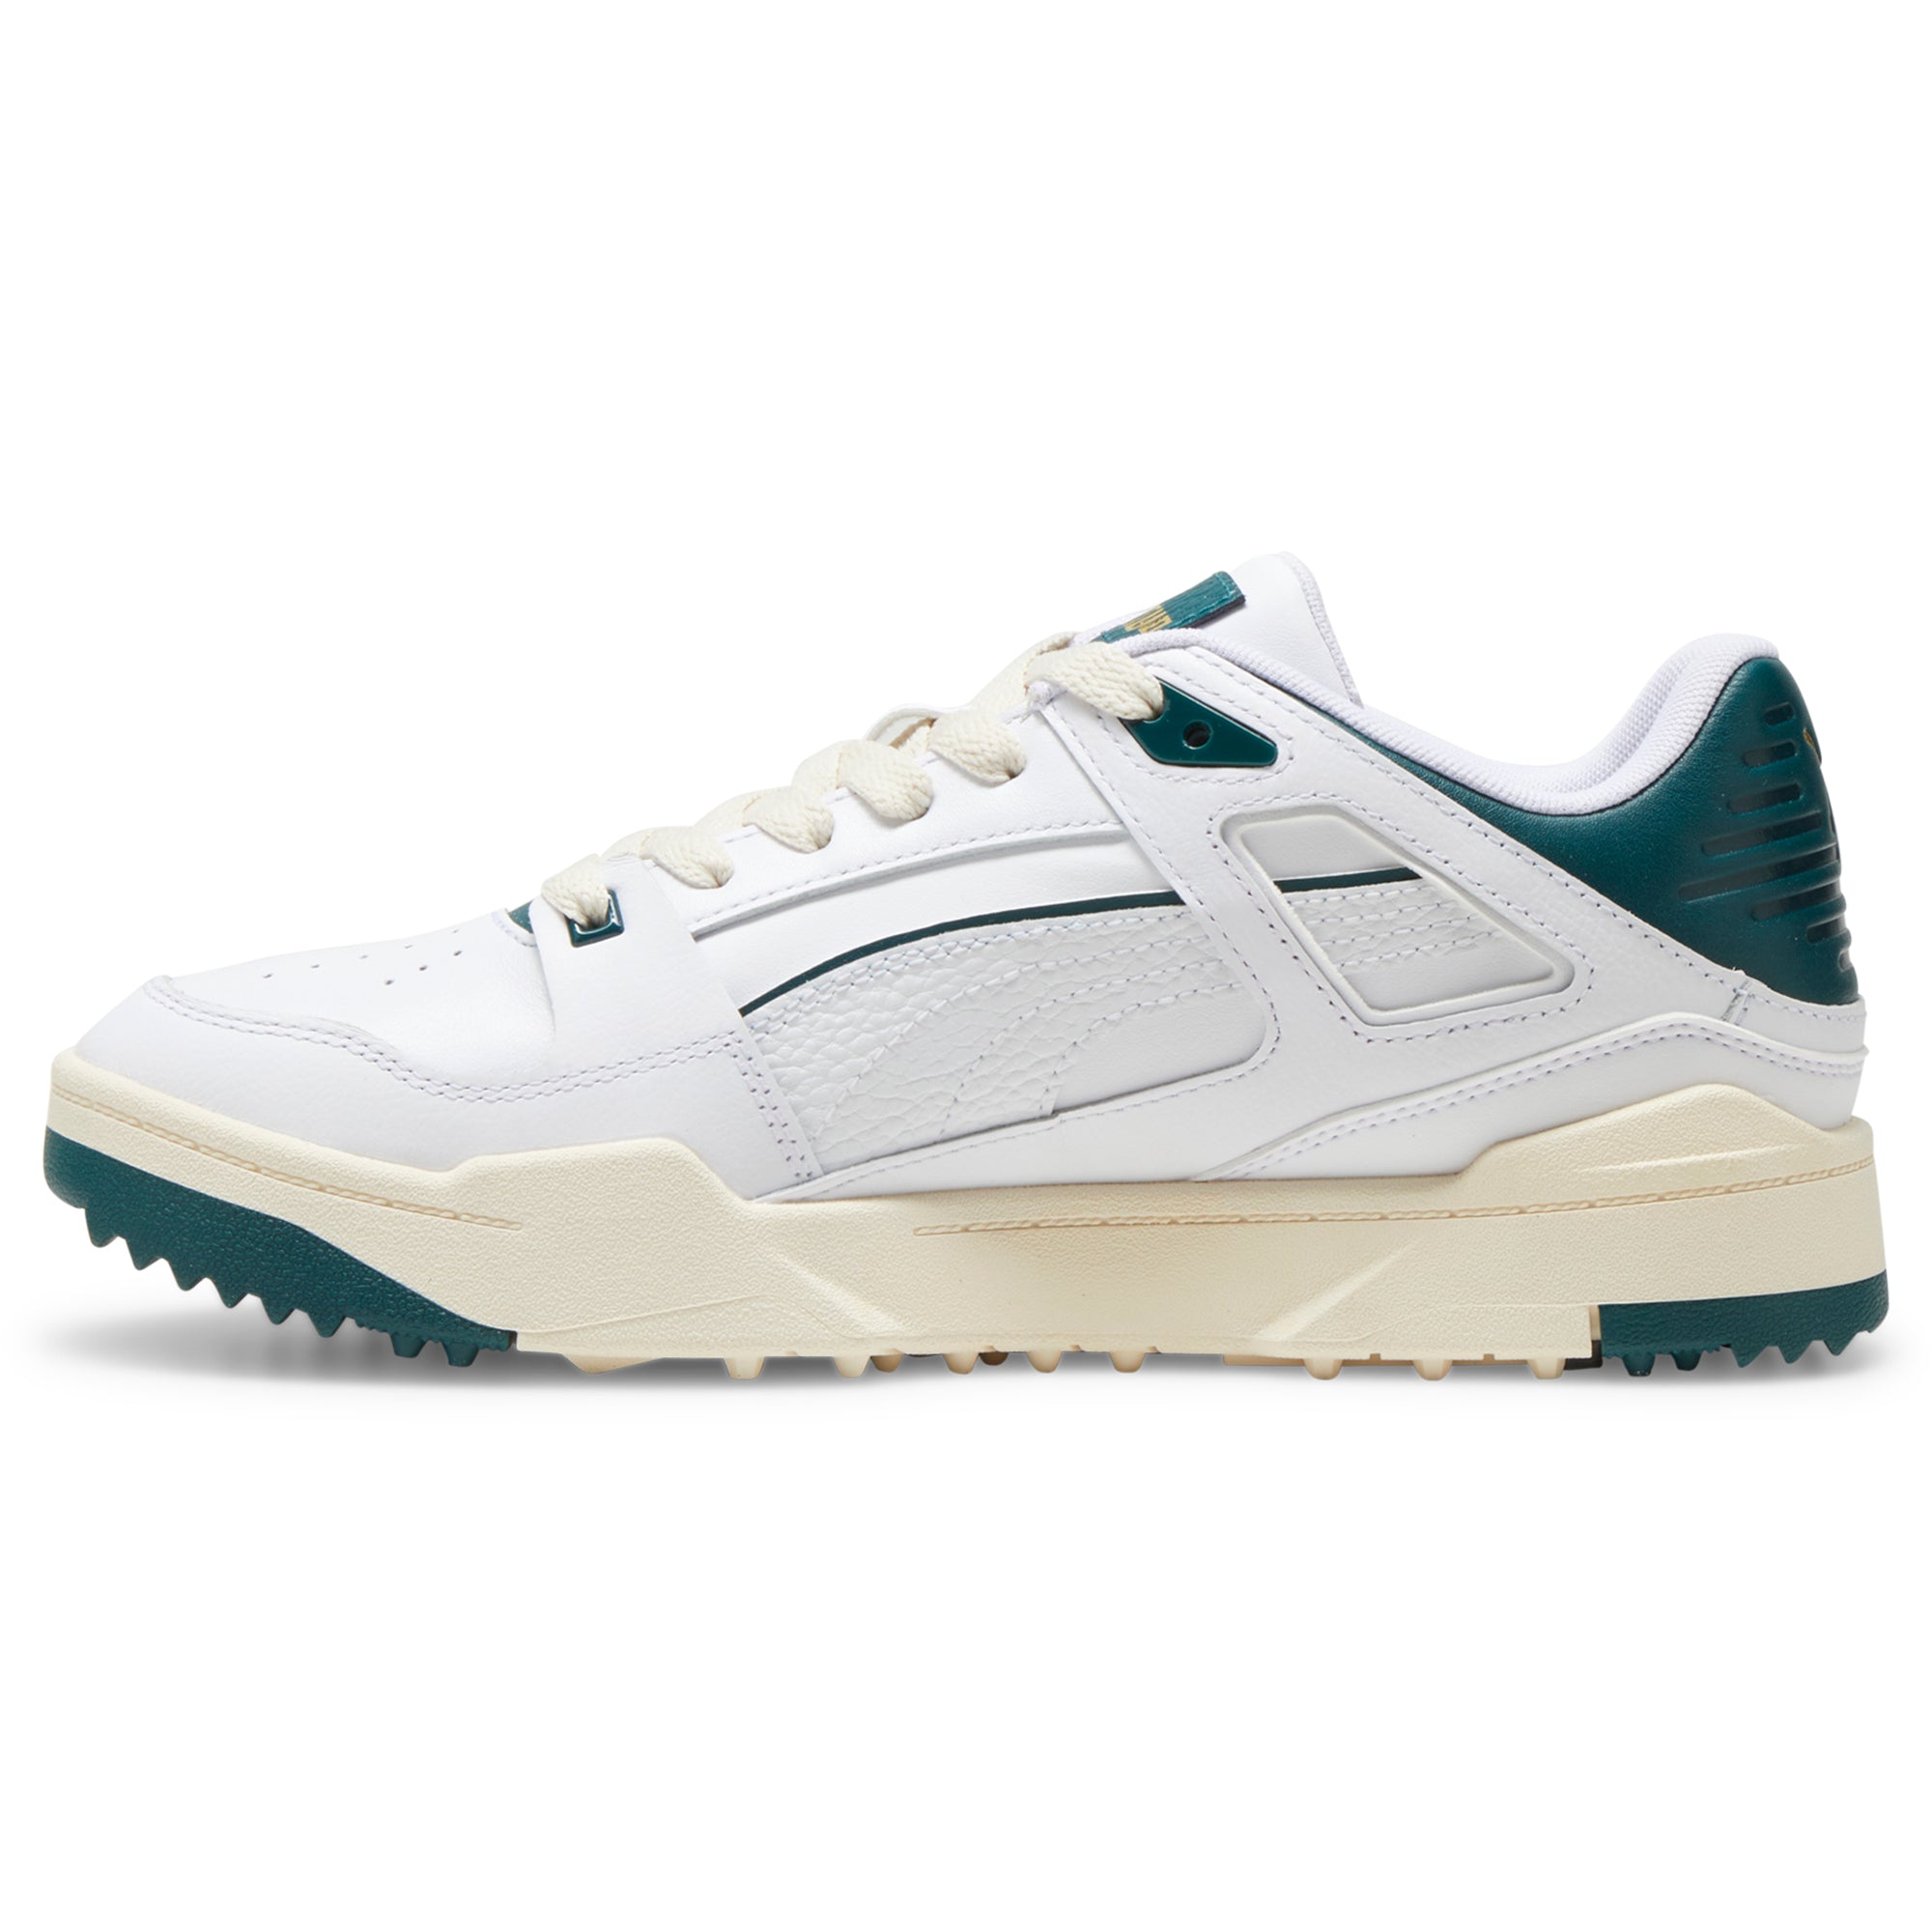 puma-slipstream-golf-shoes-309744-puma-white-varsity-green-03